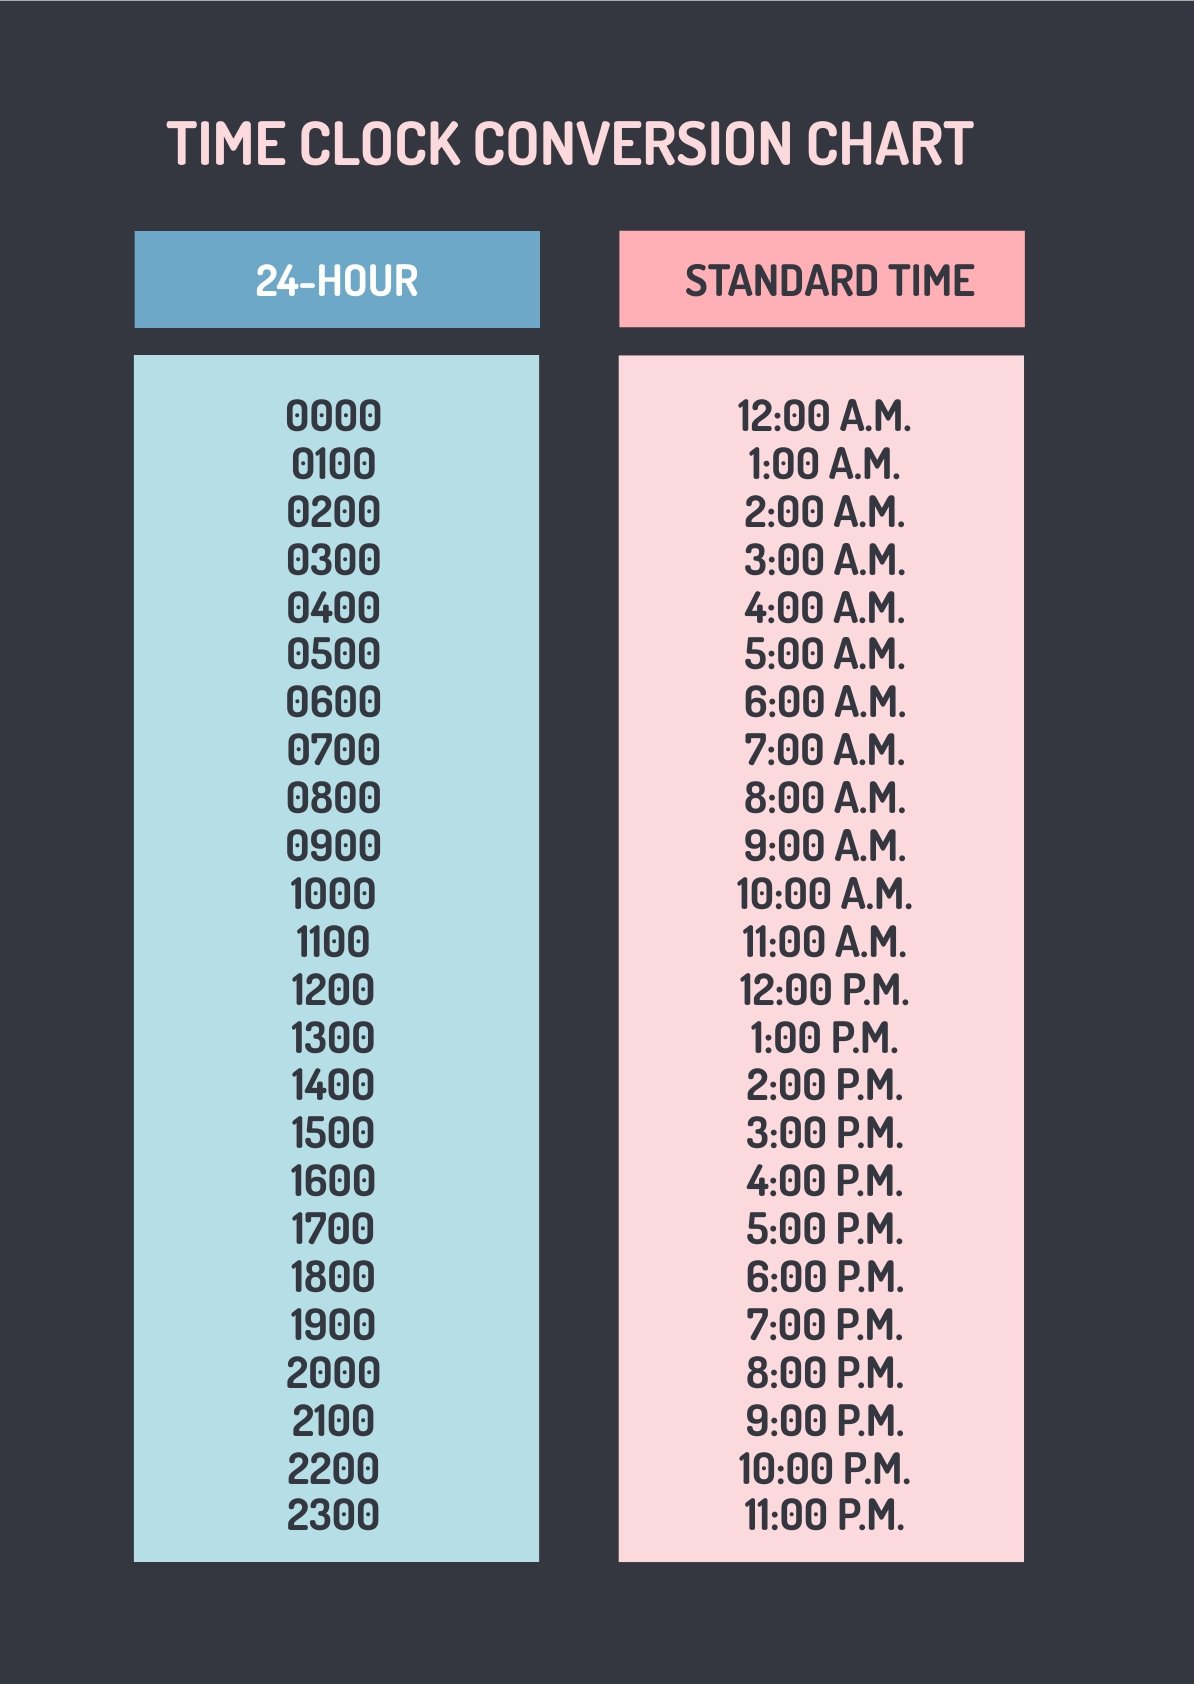 Standard Time Conversion Chart